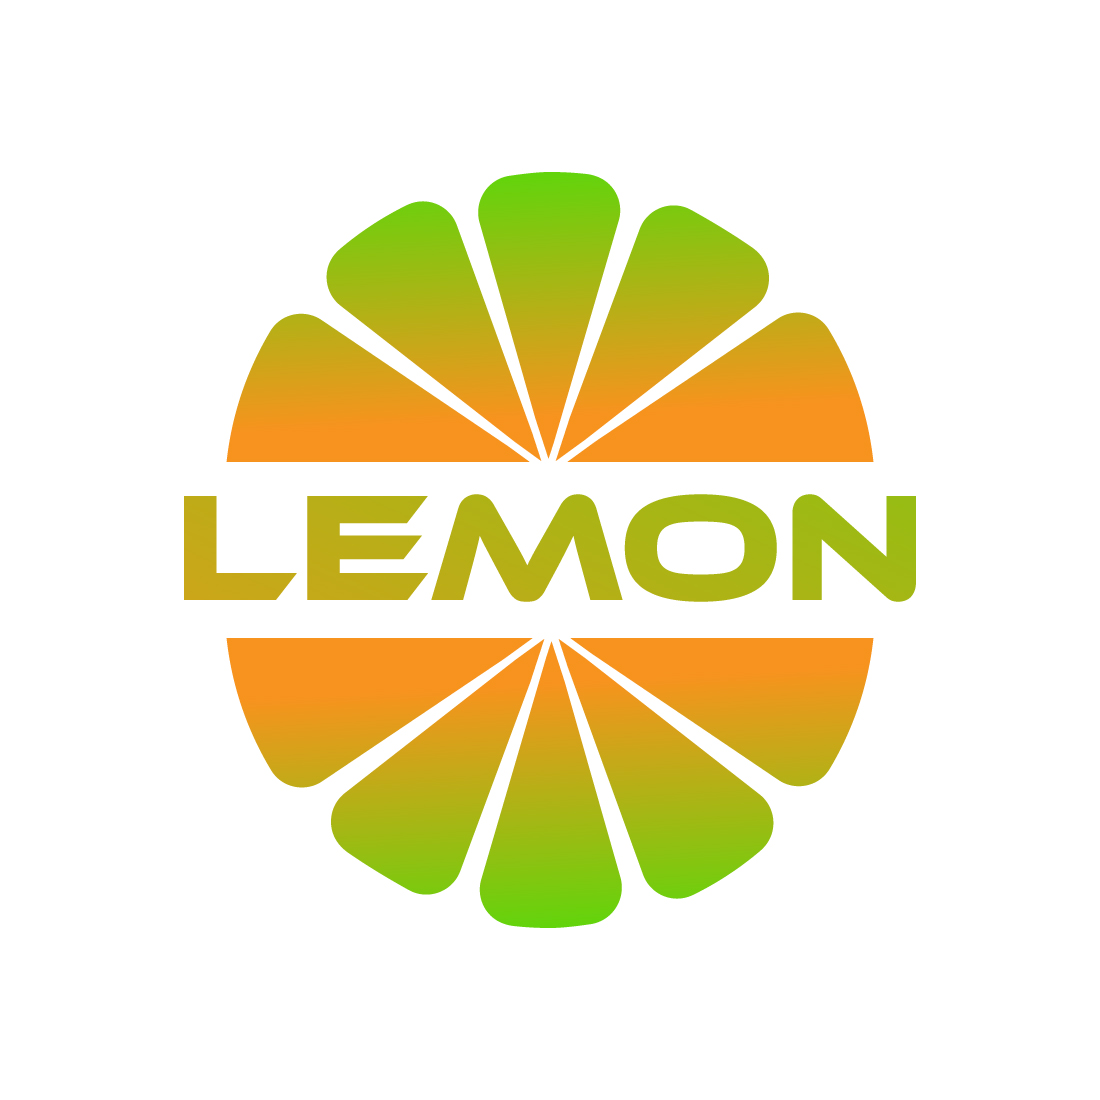 Lemon logo design vector images lemon Fresh Fruit logo template icon design preview image.